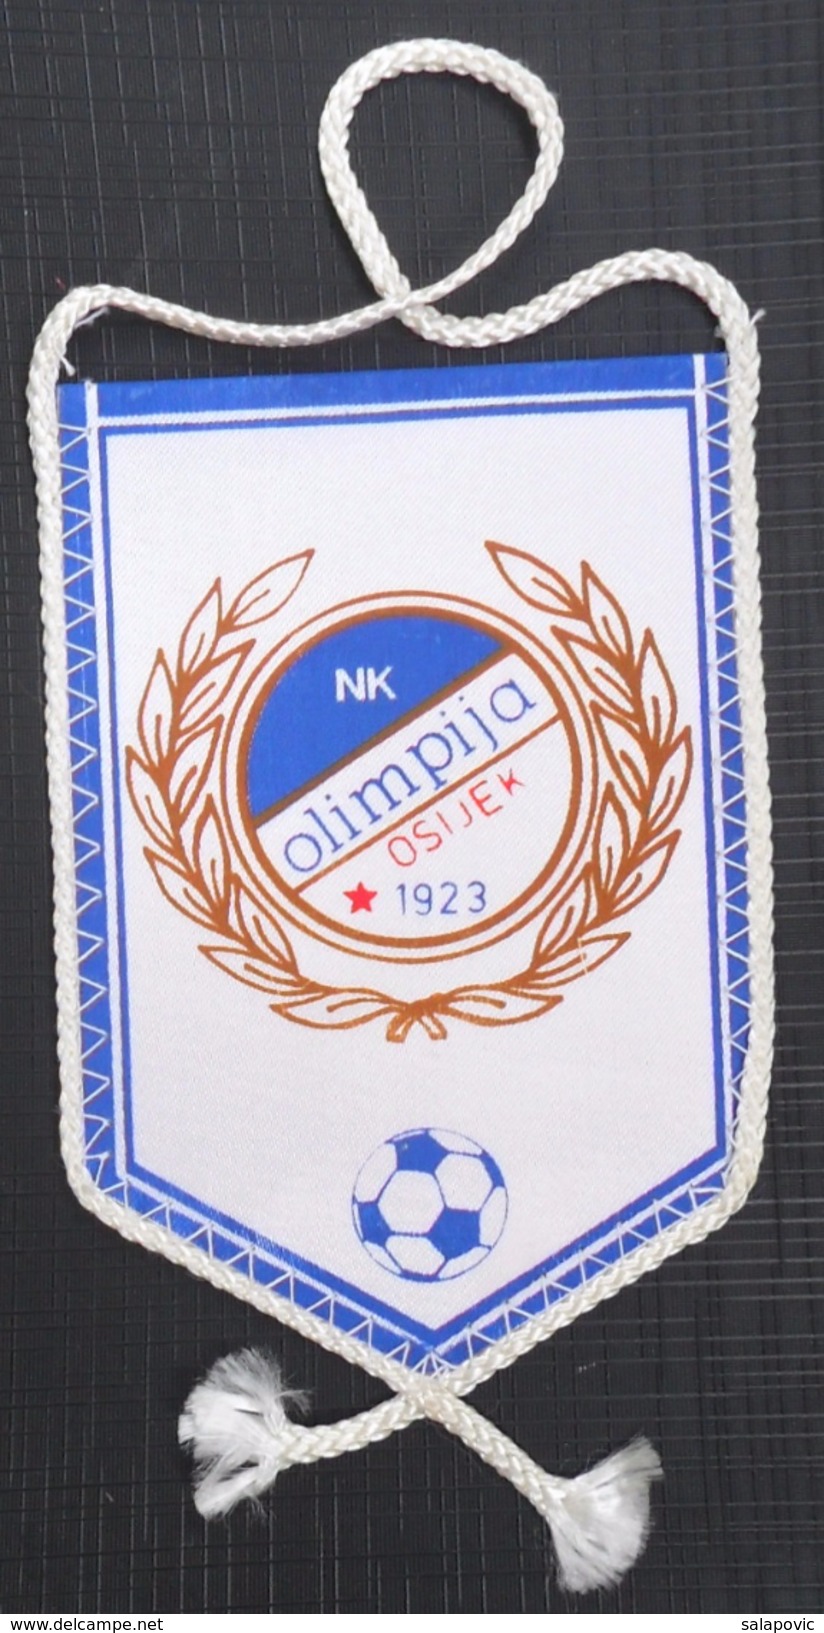 NK OLIMPIJA, OSIJEK, CROATIA  FOOTBALL CLUB, CALCIO OLD PENNANT, SPORTS FLAG - Bekleidung, Souvenirs Und Sonstige